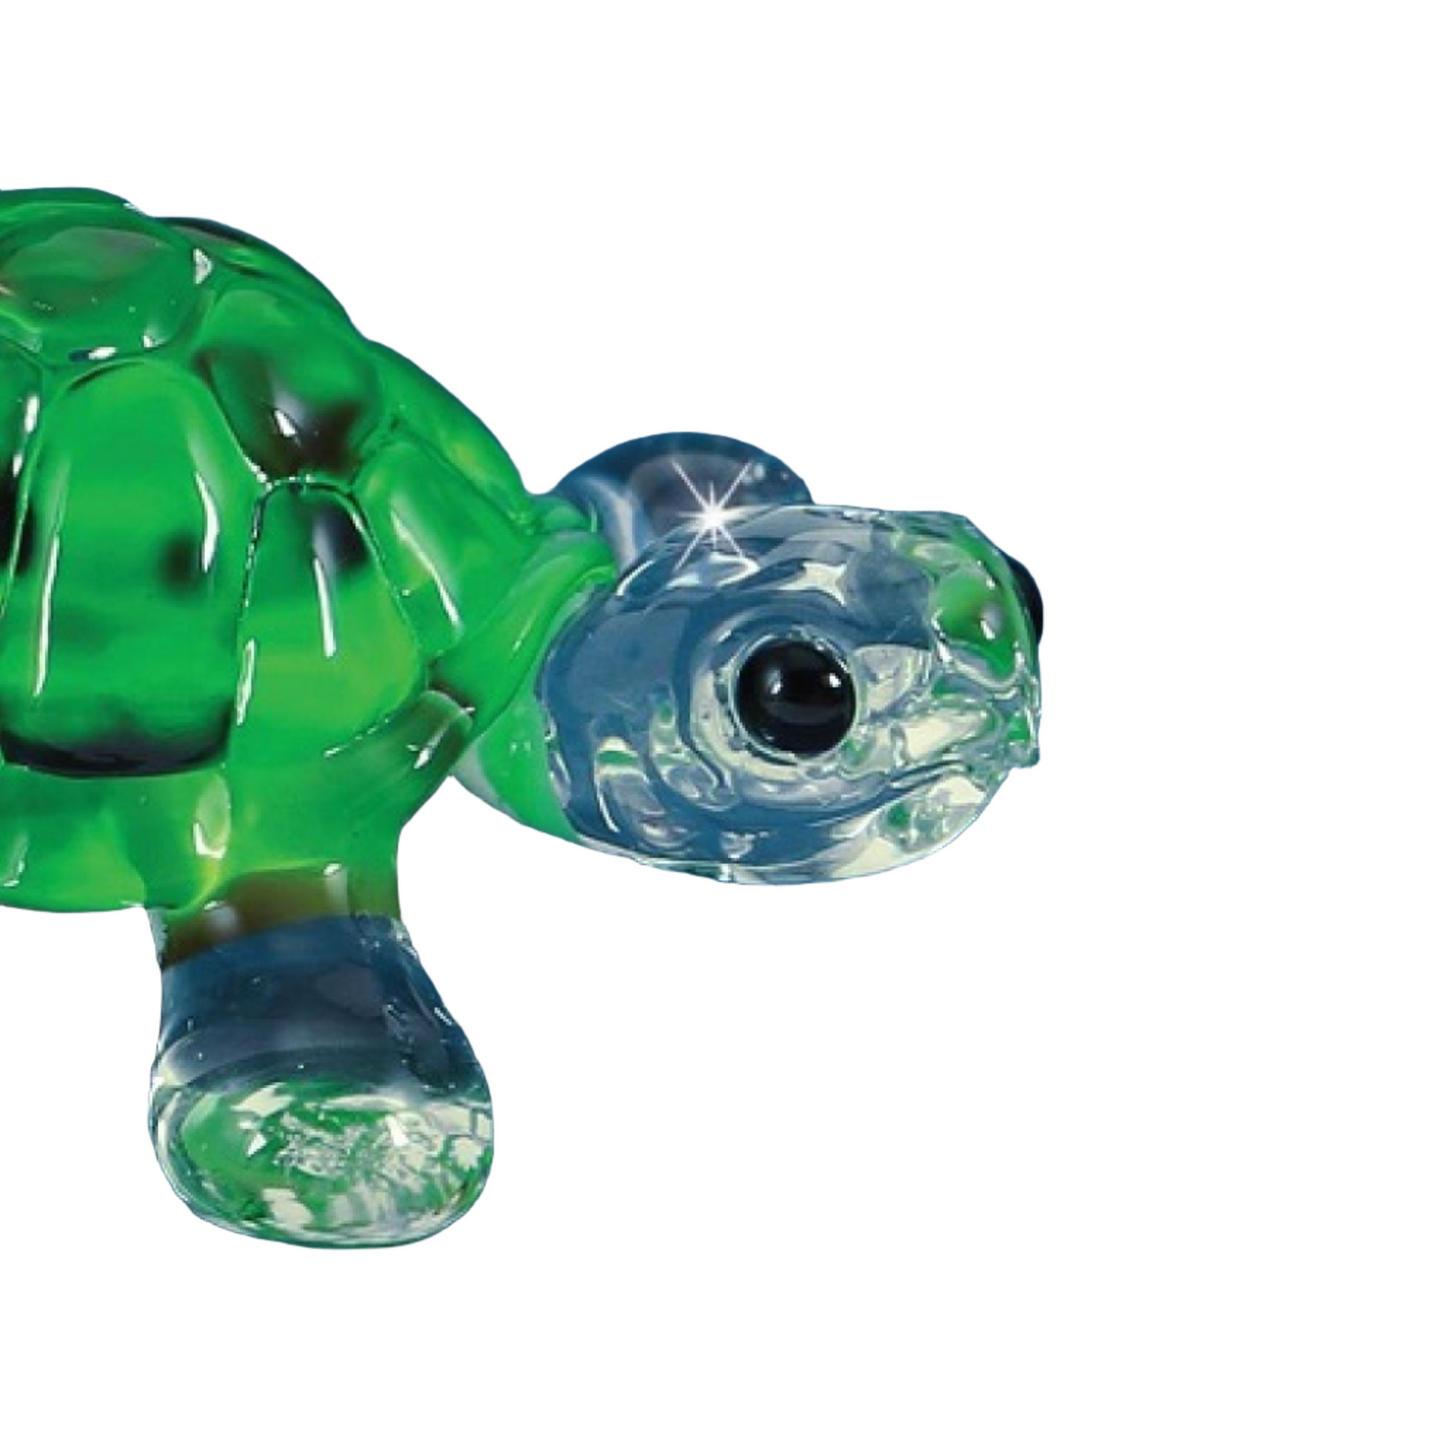 Glass Baron Green Turtle Figurine